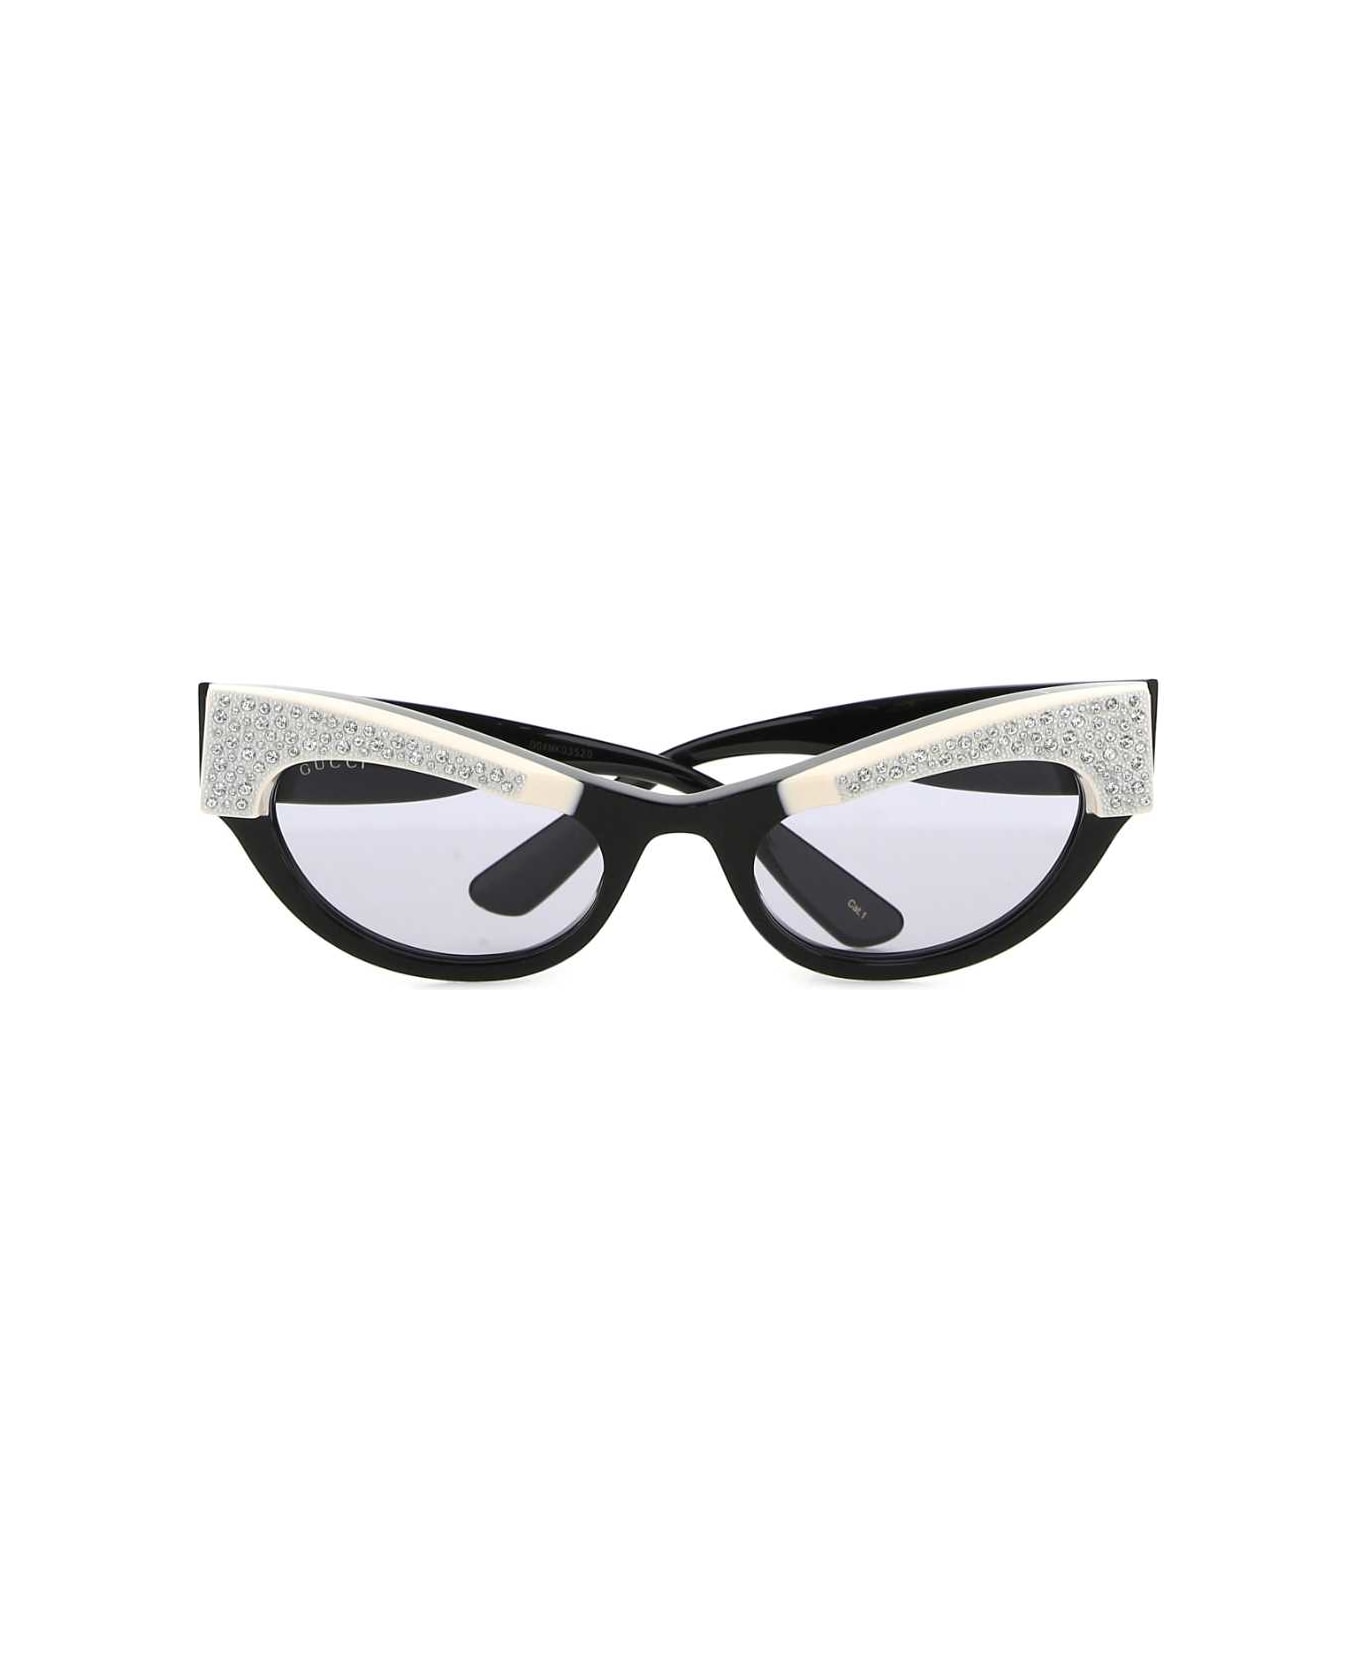 Gucci Black Acetate Sunglasses - 1053